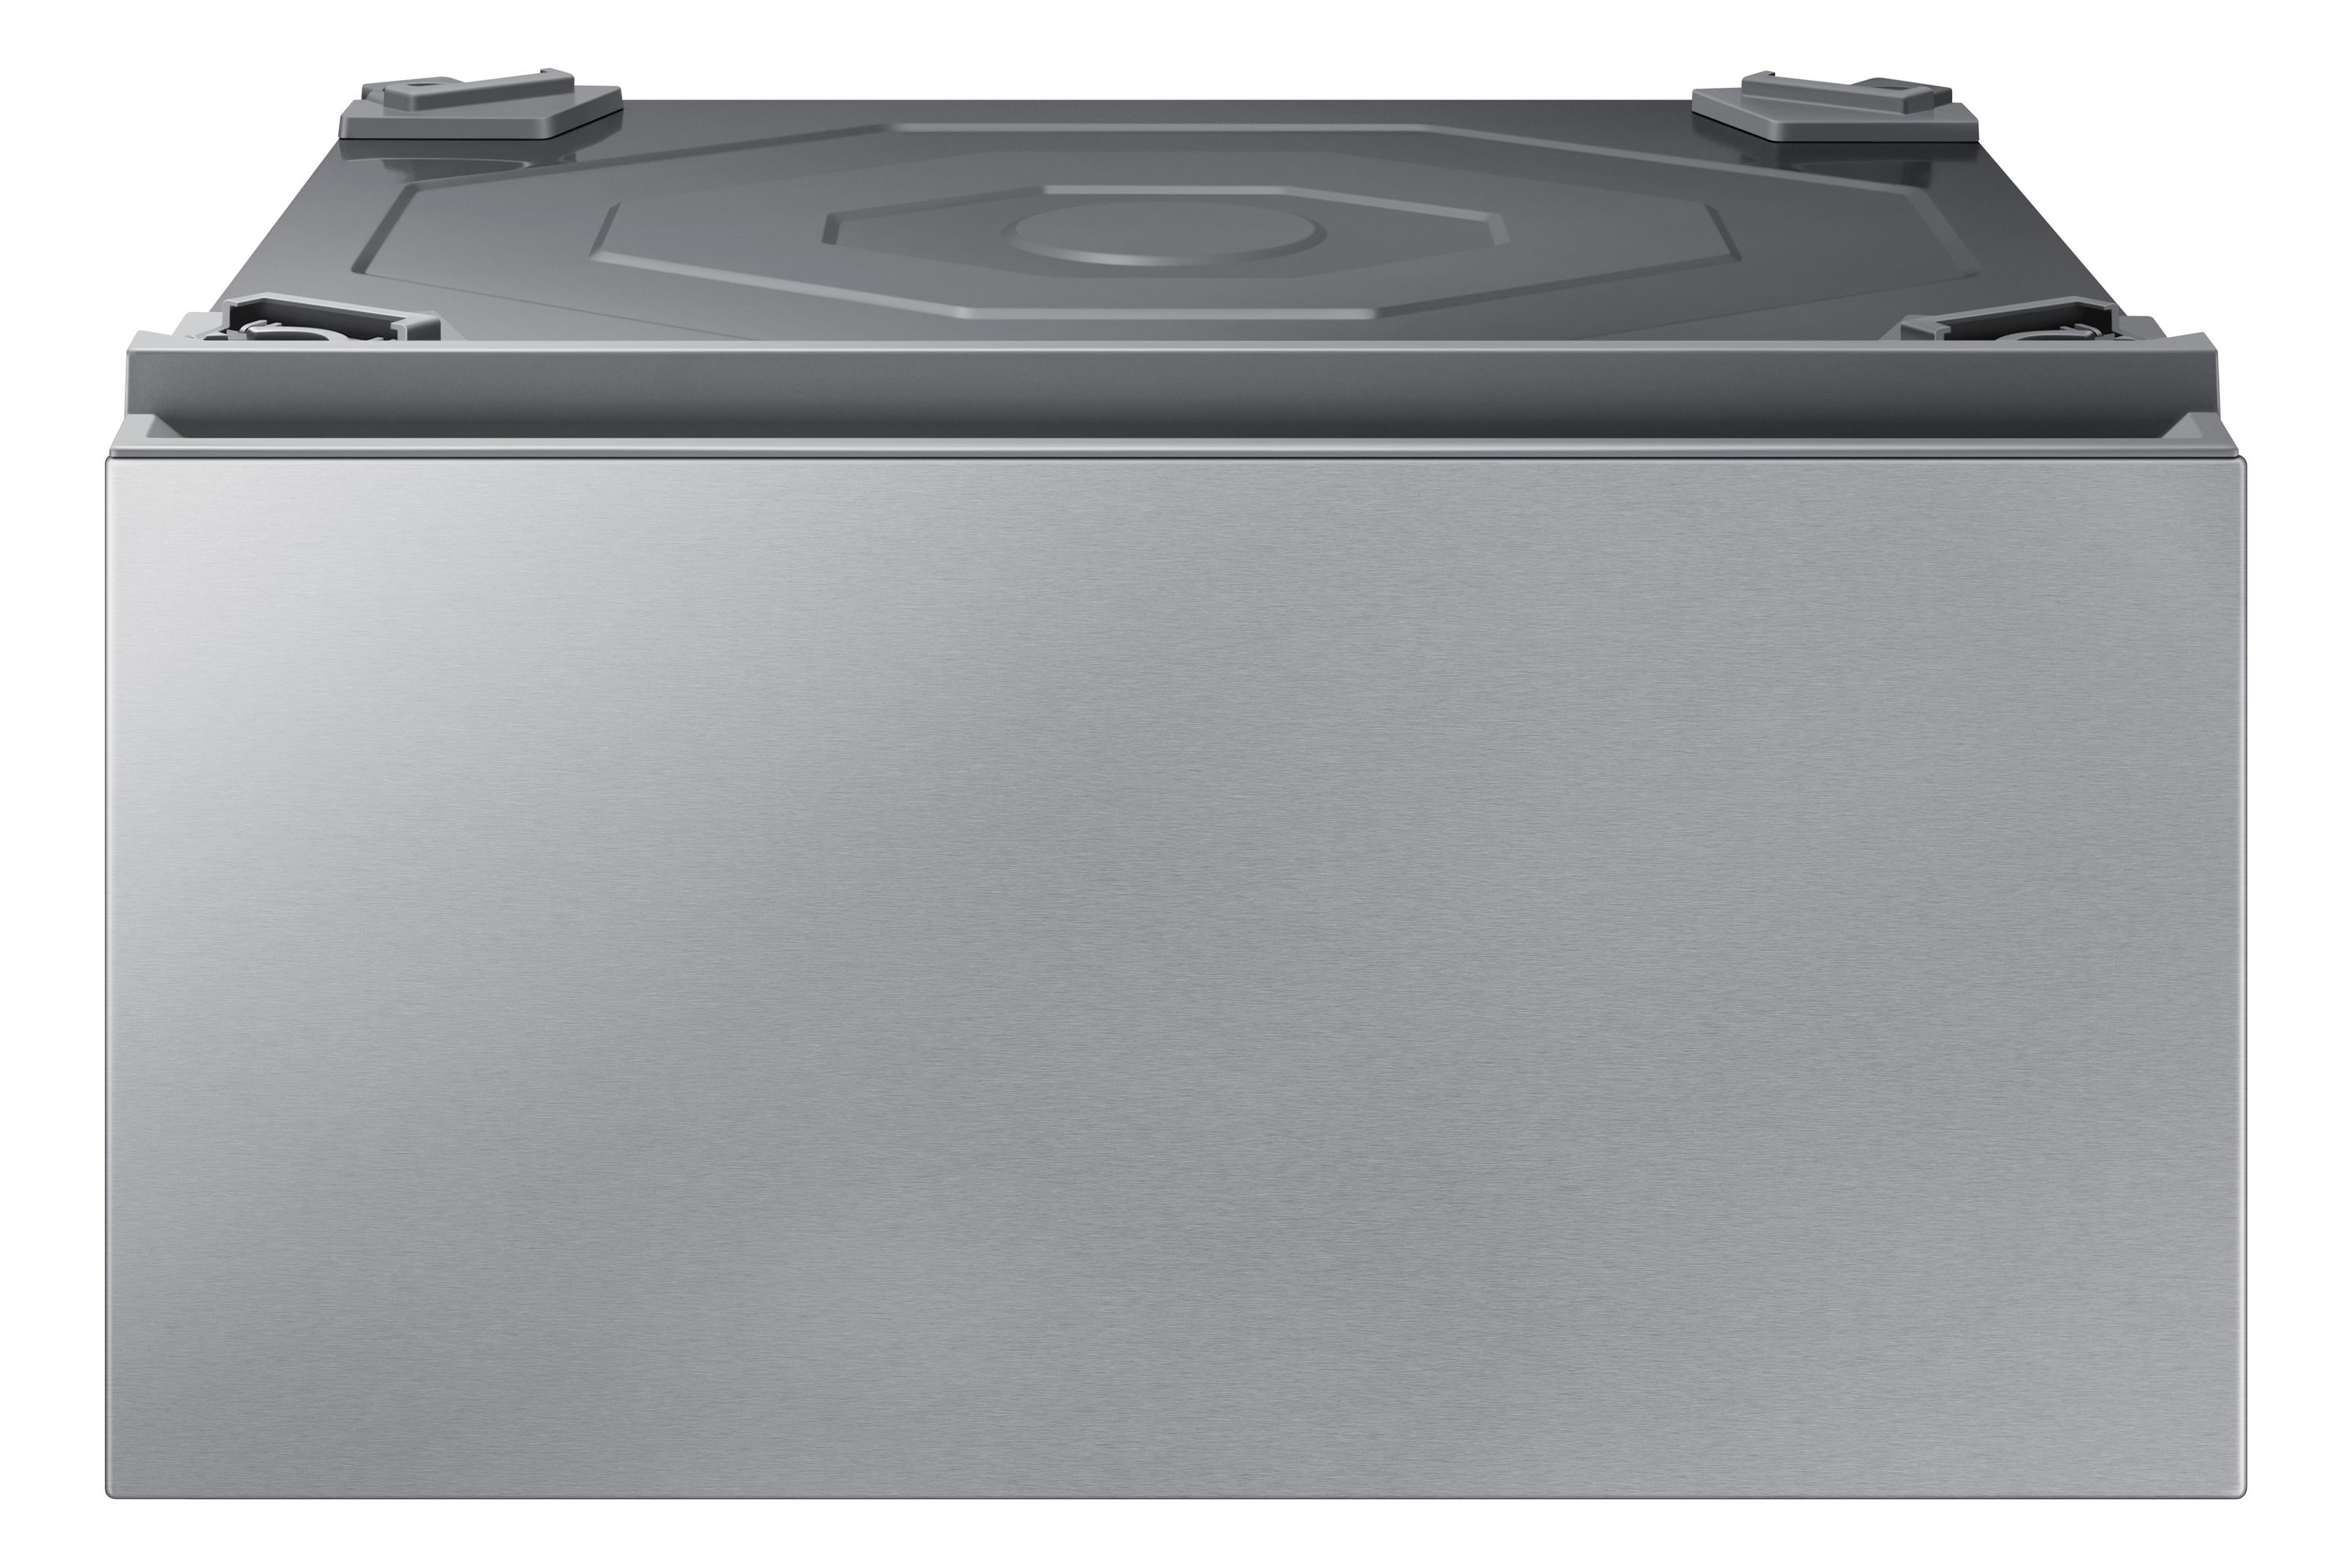 Samsung SAWADRGV85005 Side-by-Side on Storage Drawer Pedestal Washer &  Dryer Set with Front Load Washer and Gas Dryer